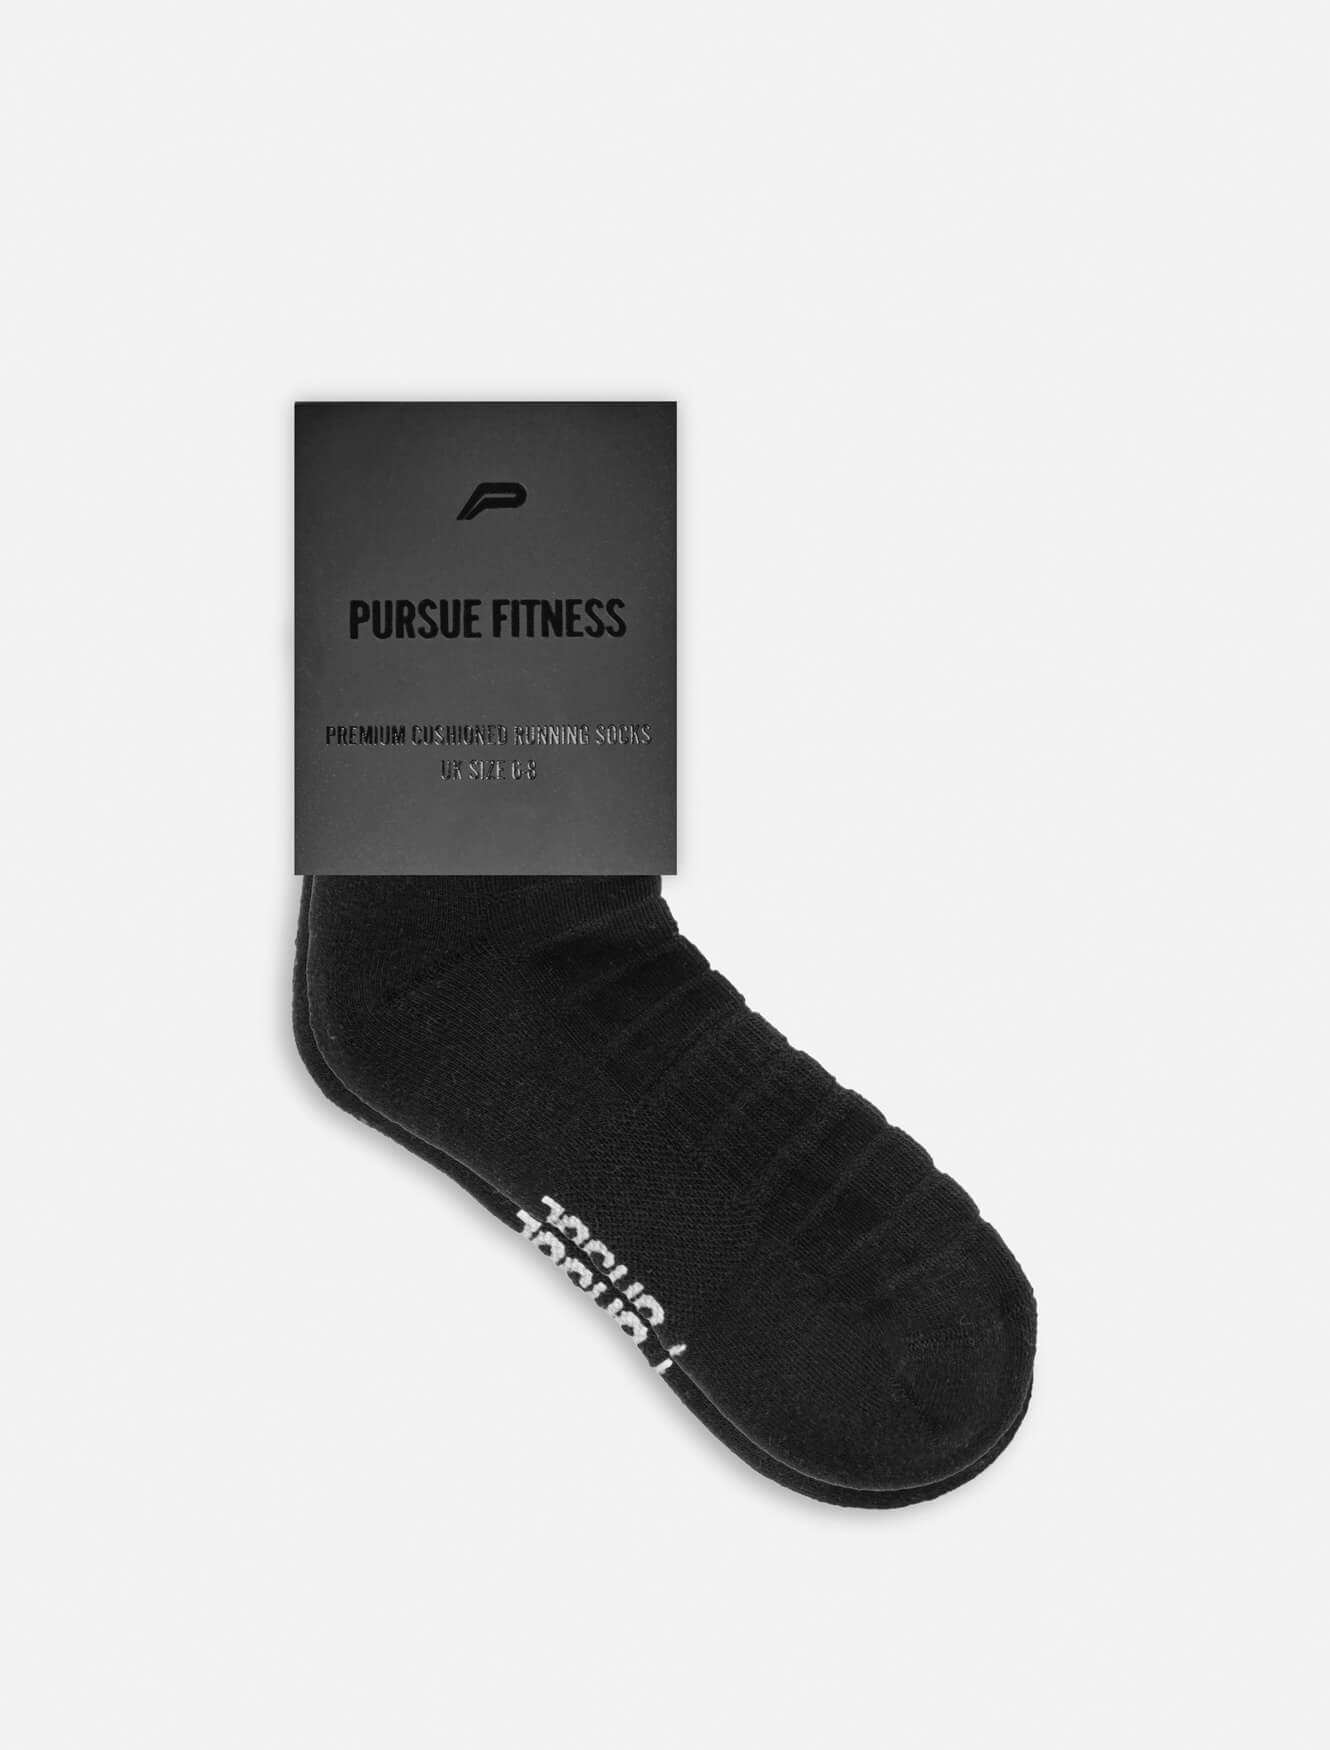 Premium Cushioned Running Socks / Black Pursue Fitness 2